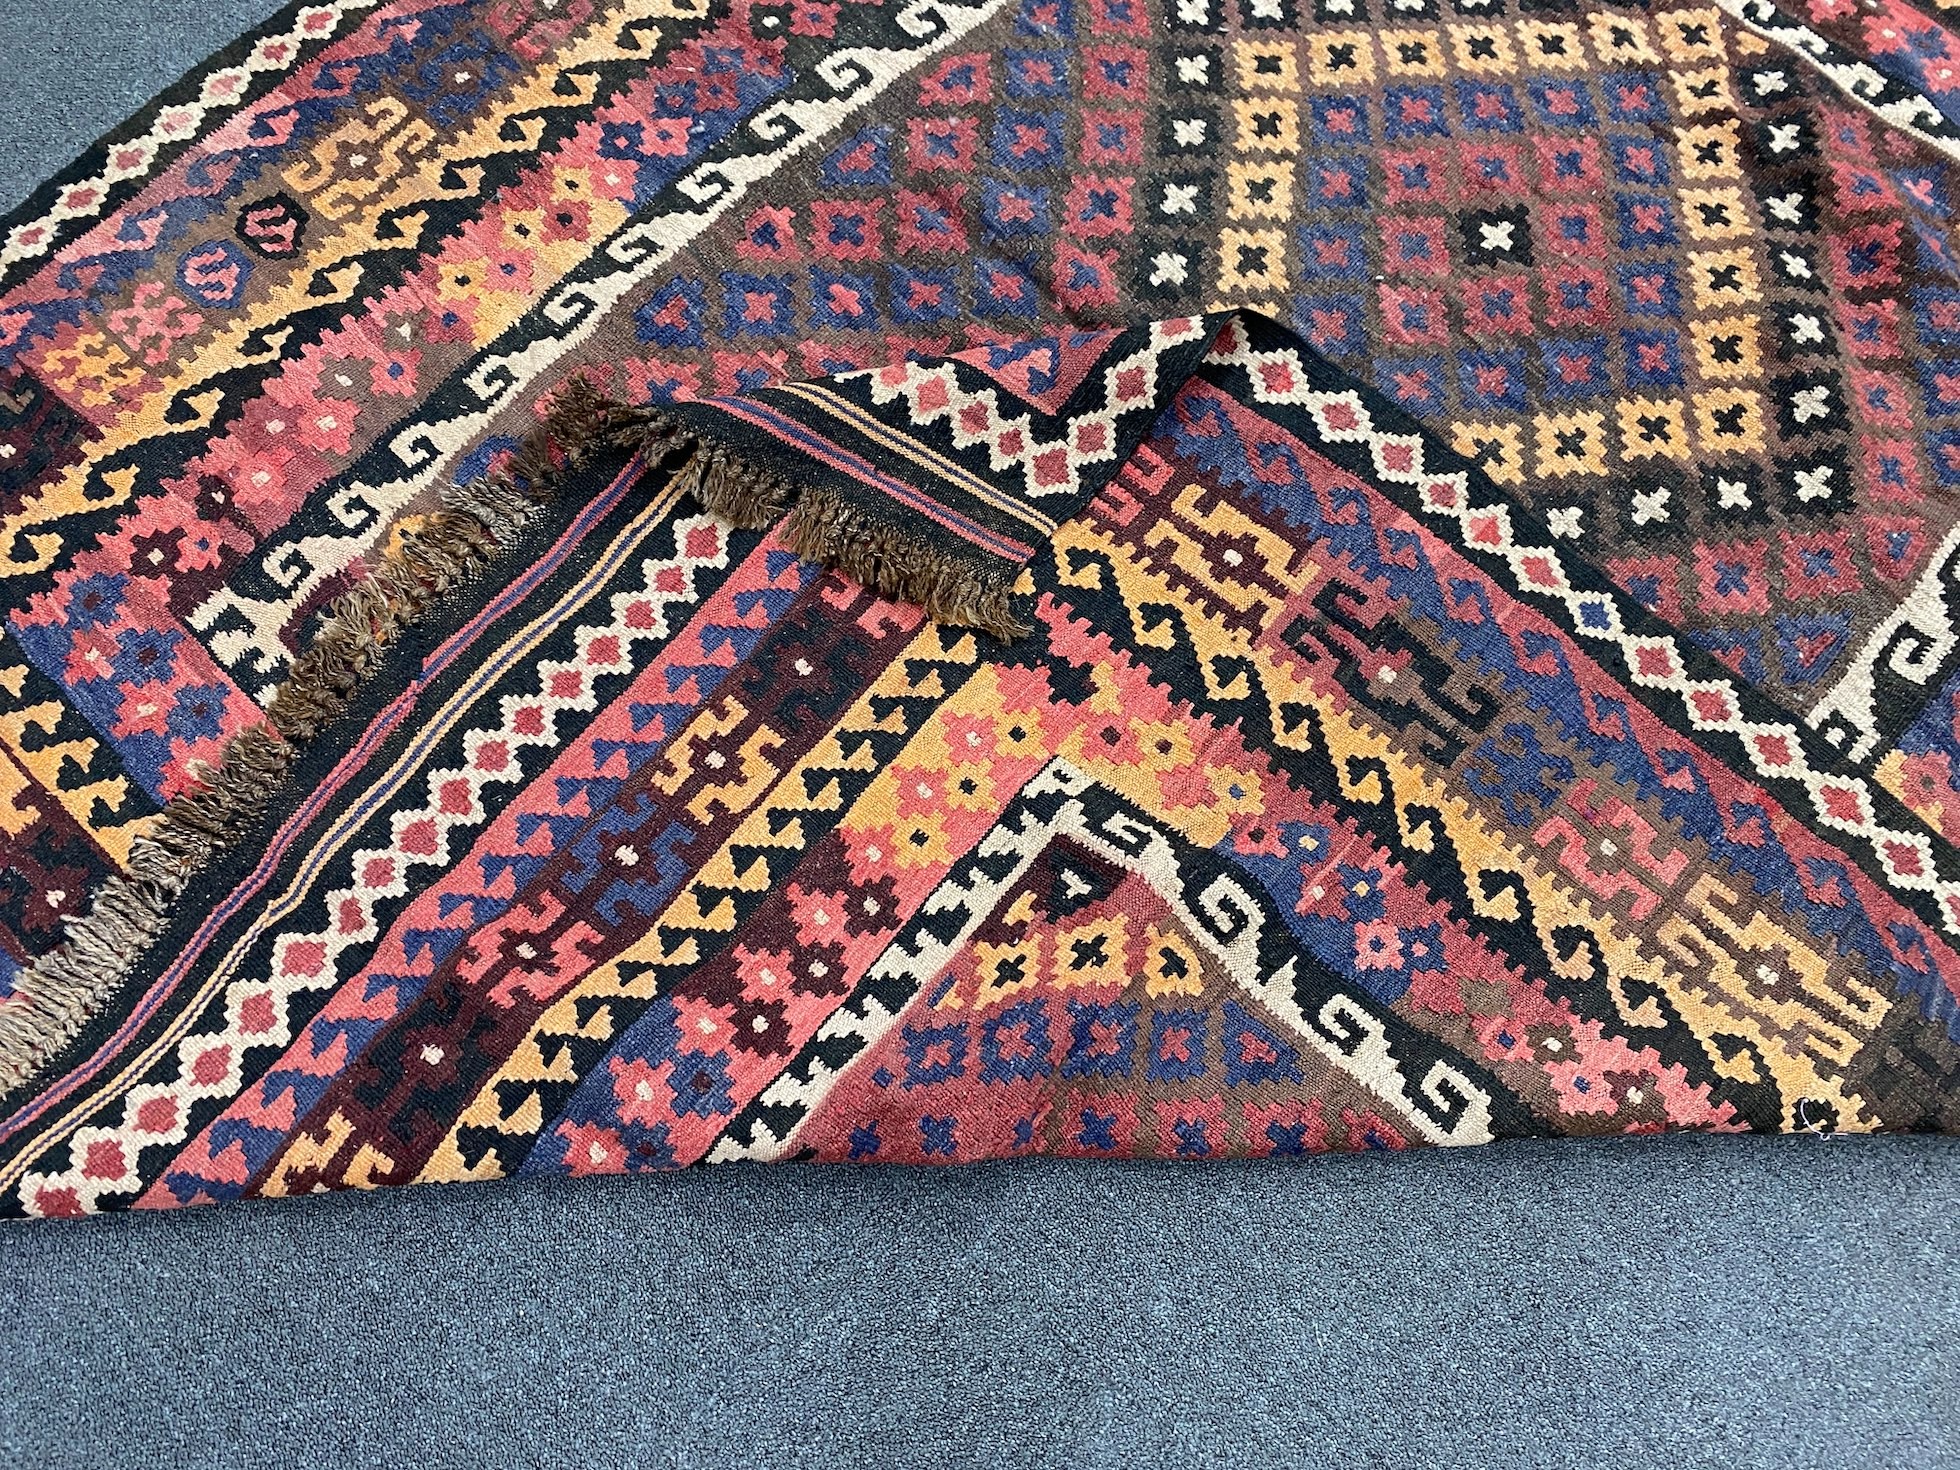 A polychrome flatweave rug, 203 x 160cm - Image 3 of 3